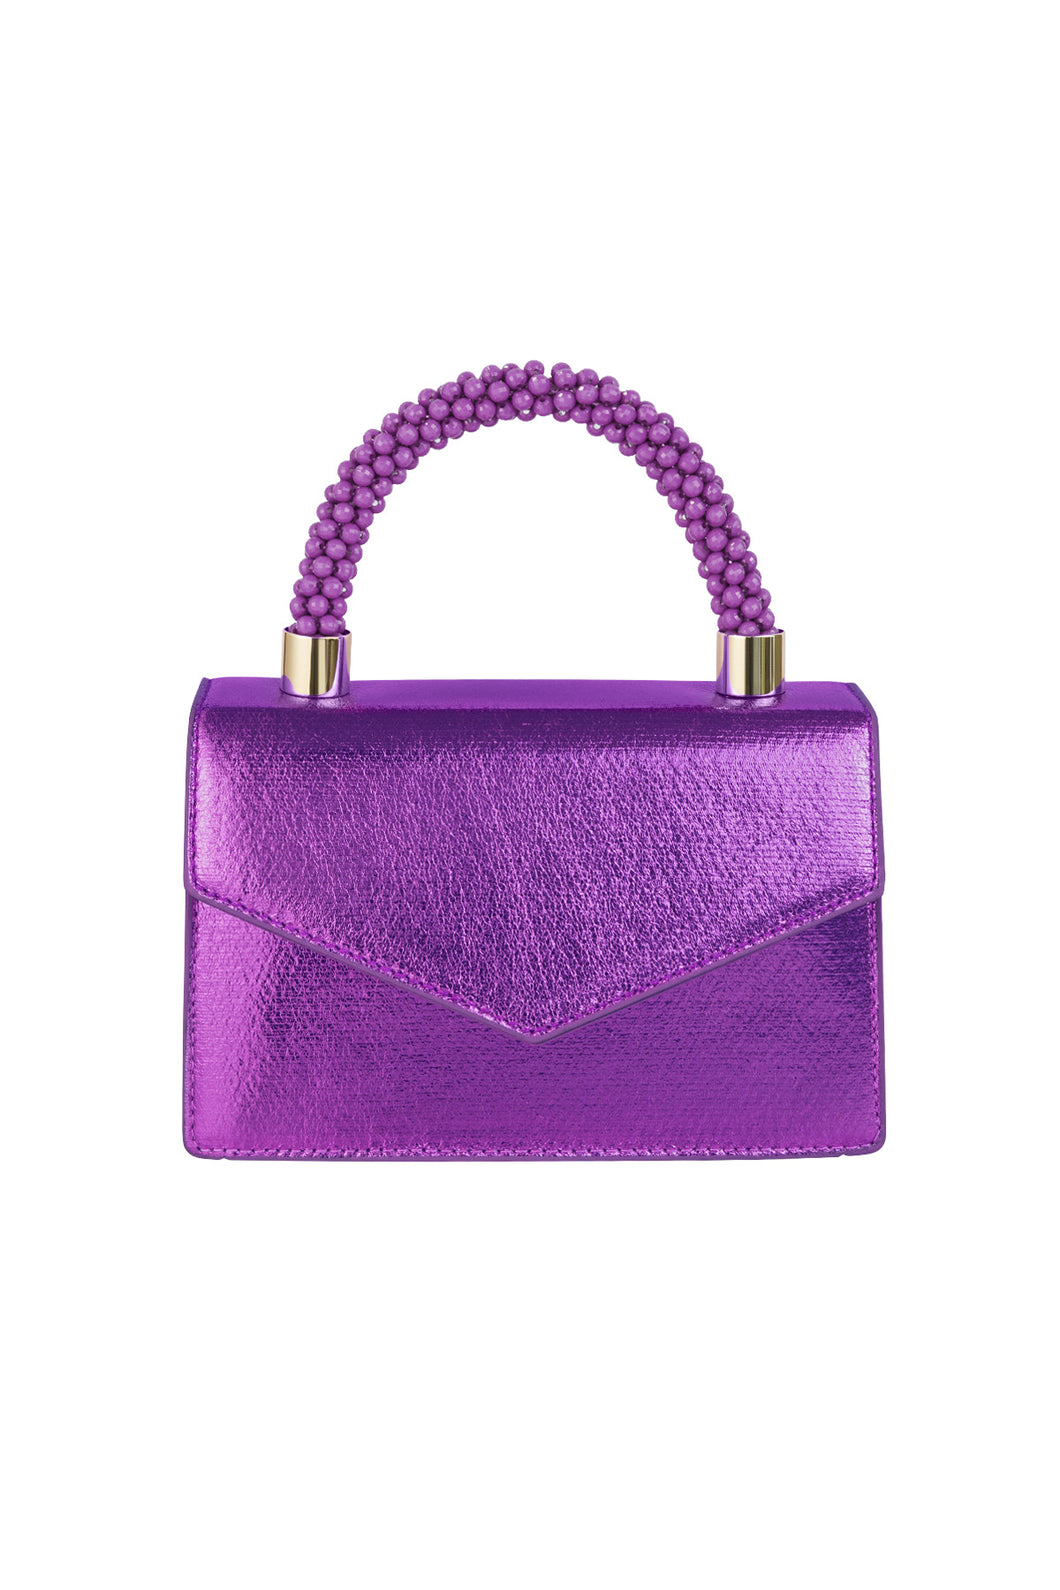 Bubble Envelope Crossbody Bag - purple metallic